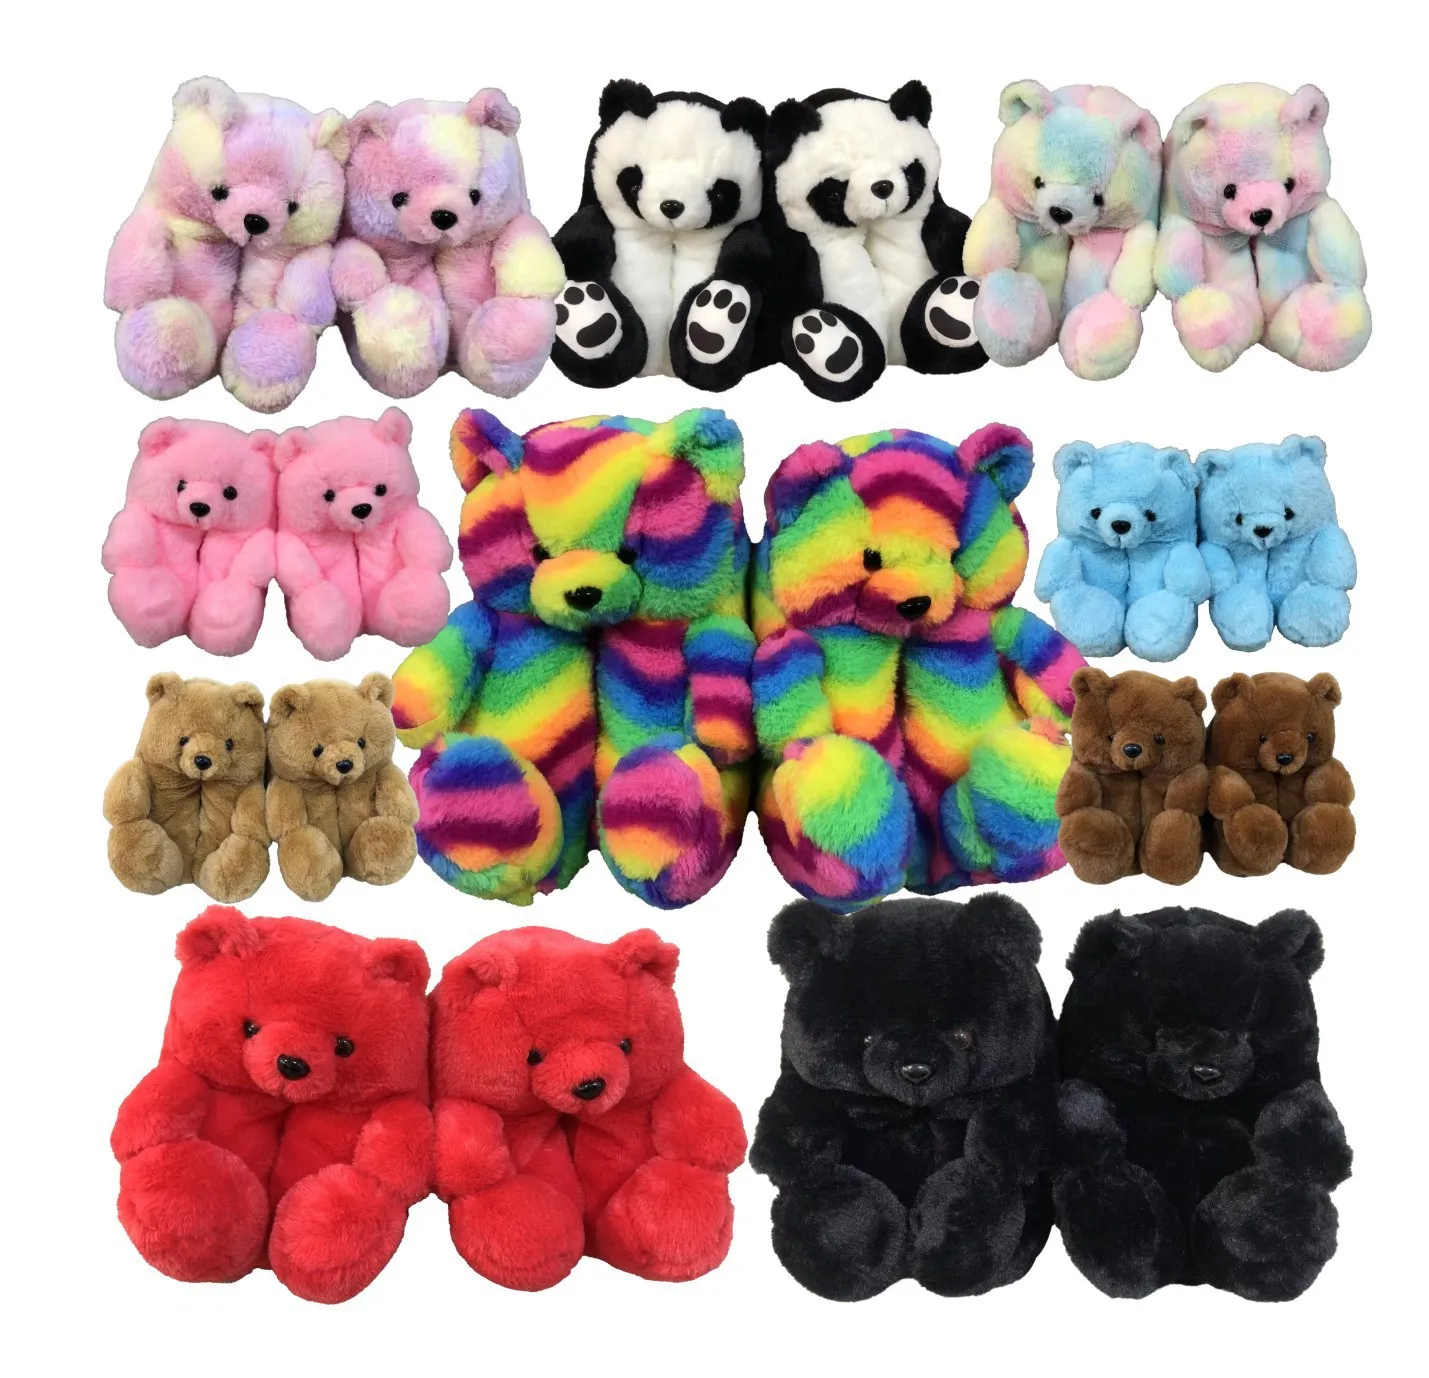 

Amazon Hot Selling Custom Stuffed Plush Toy Teddy Plush Bear Slipper House slippers Bedroom slippers for women and kids